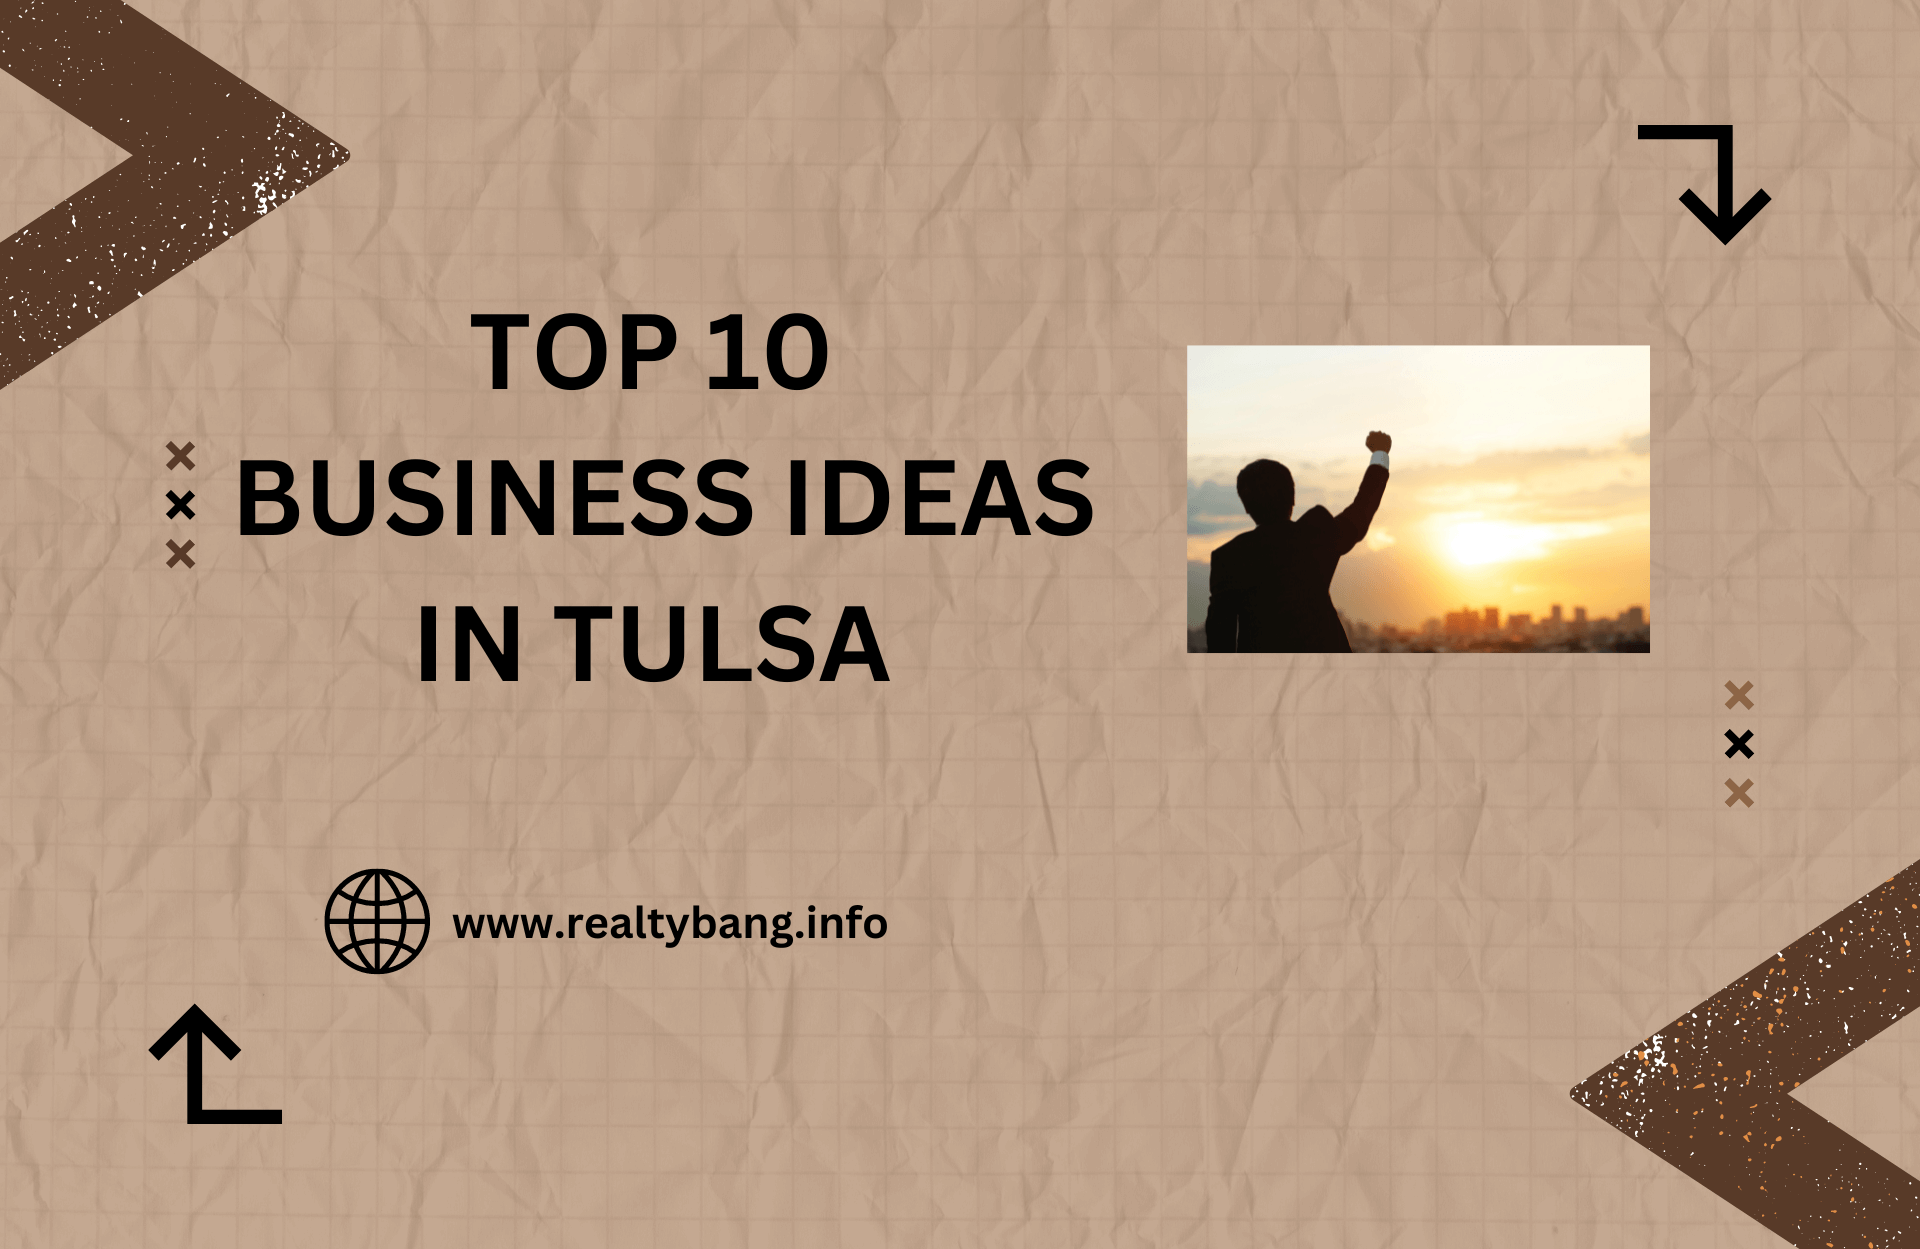 TOP 10 BUSINESS IDEAS IN TULSA